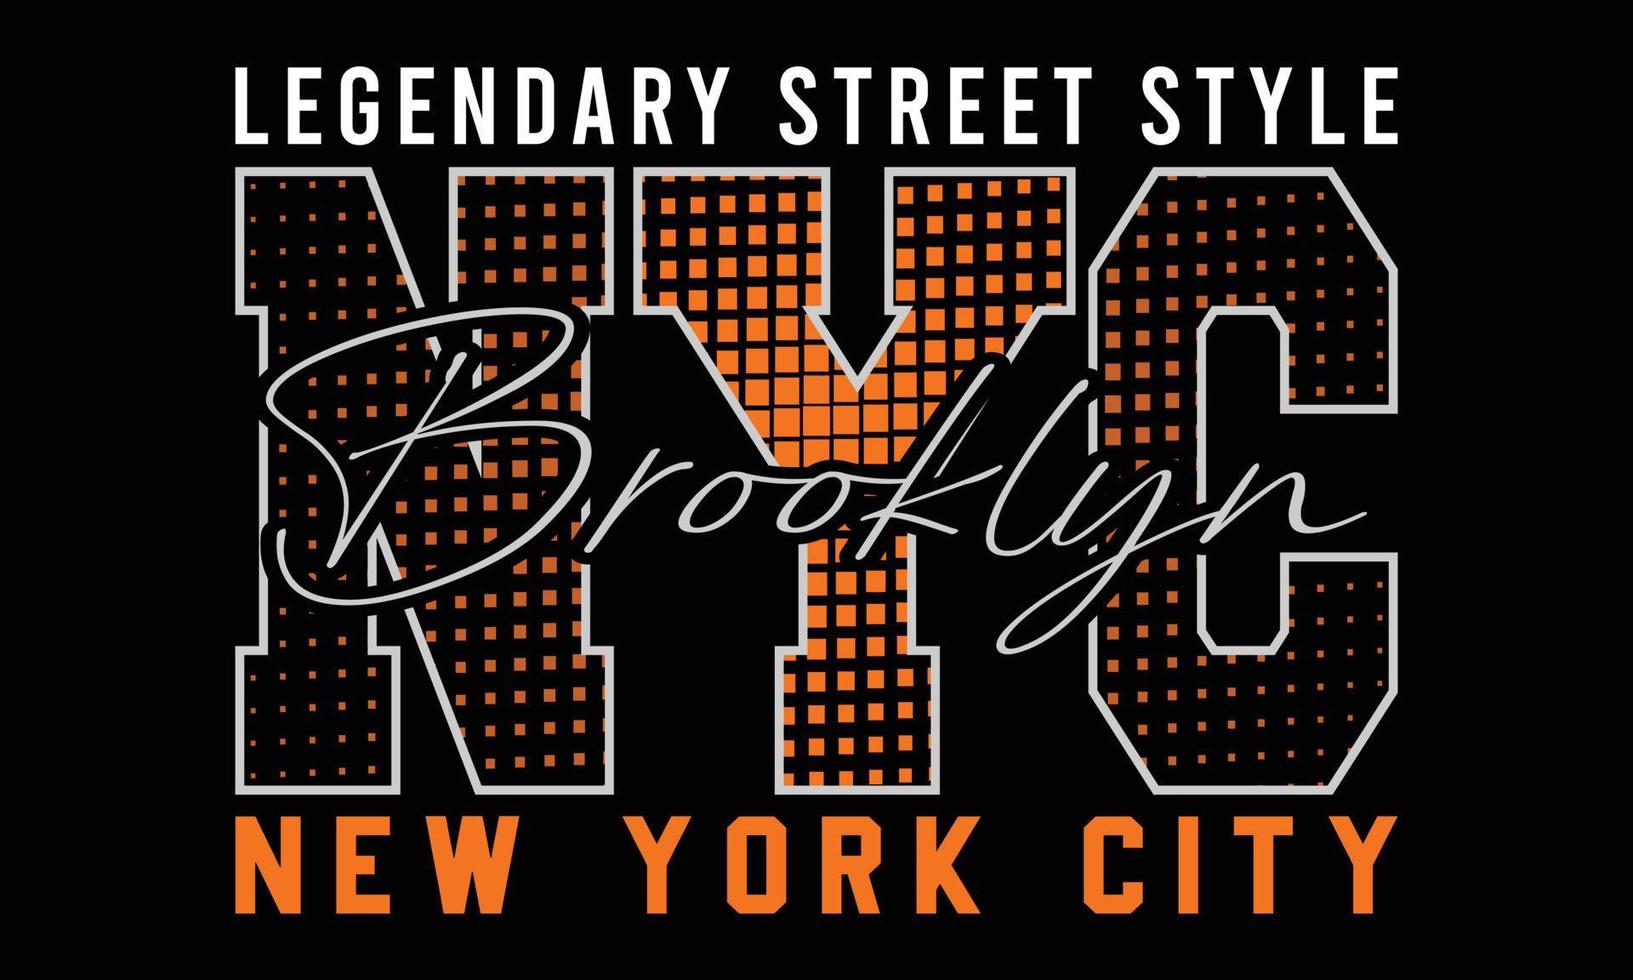 ny york stad, nyc typografi t-shirt design. motiverande ny york stad typografi t-shirt kreativ ungar, och nyc tema vektor illustration.